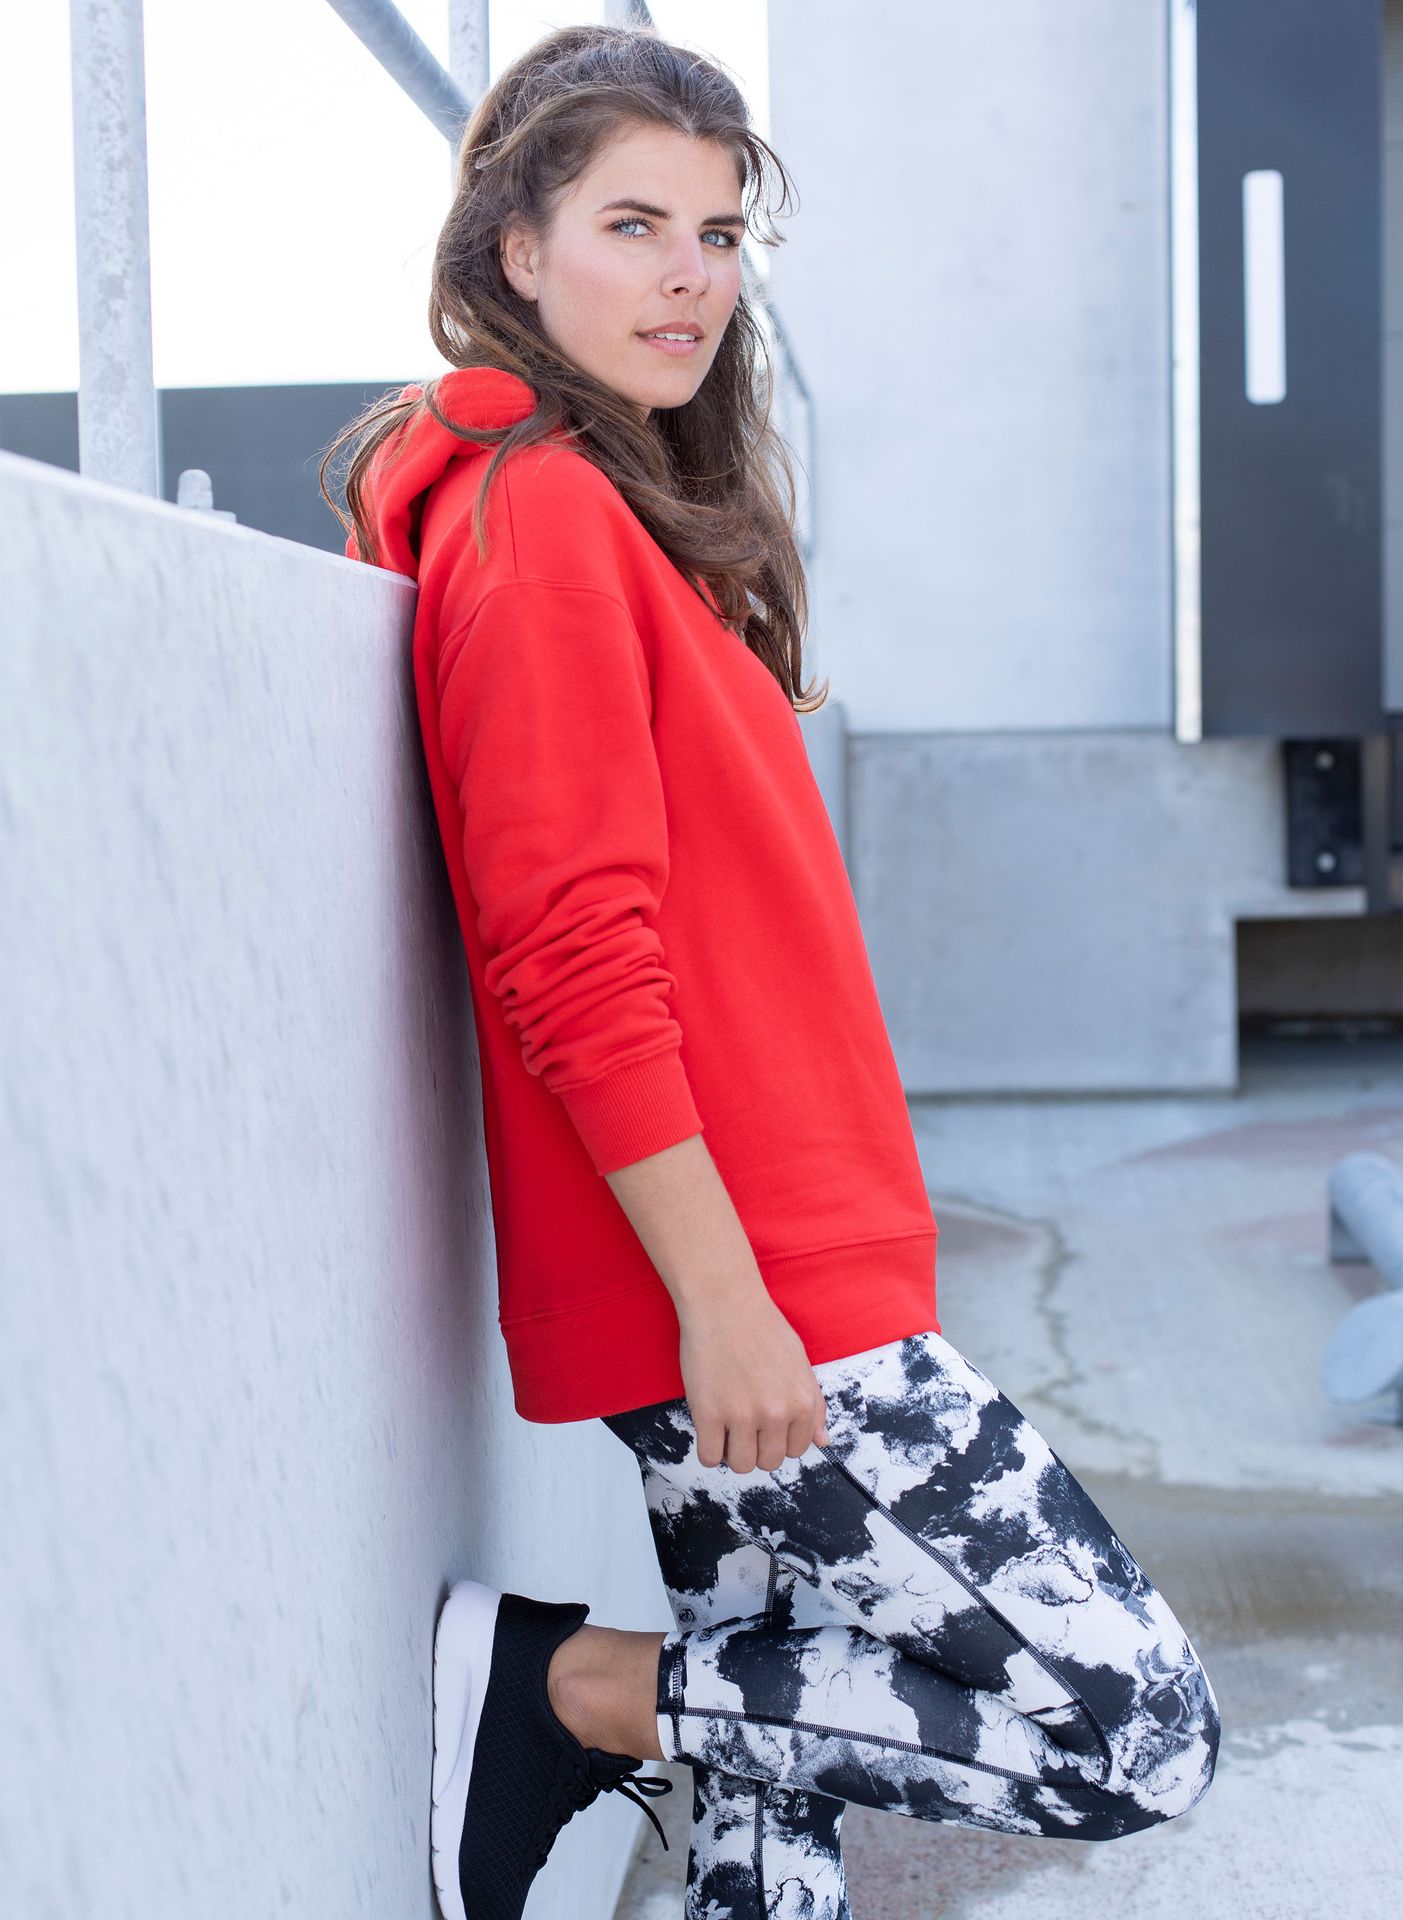 Norah Jumper - Activewear red 211902-600-48